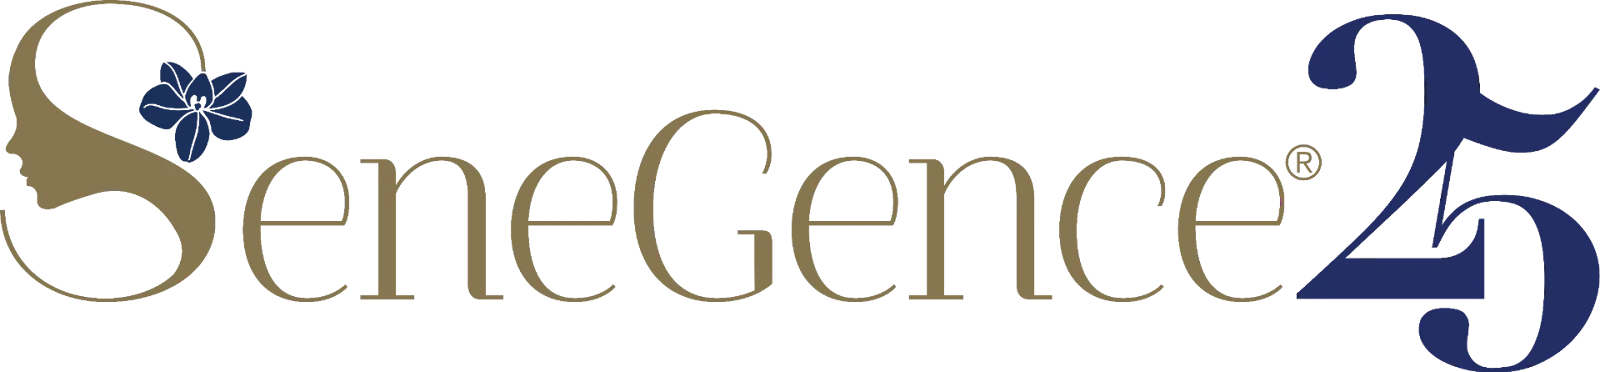 Senegence logo